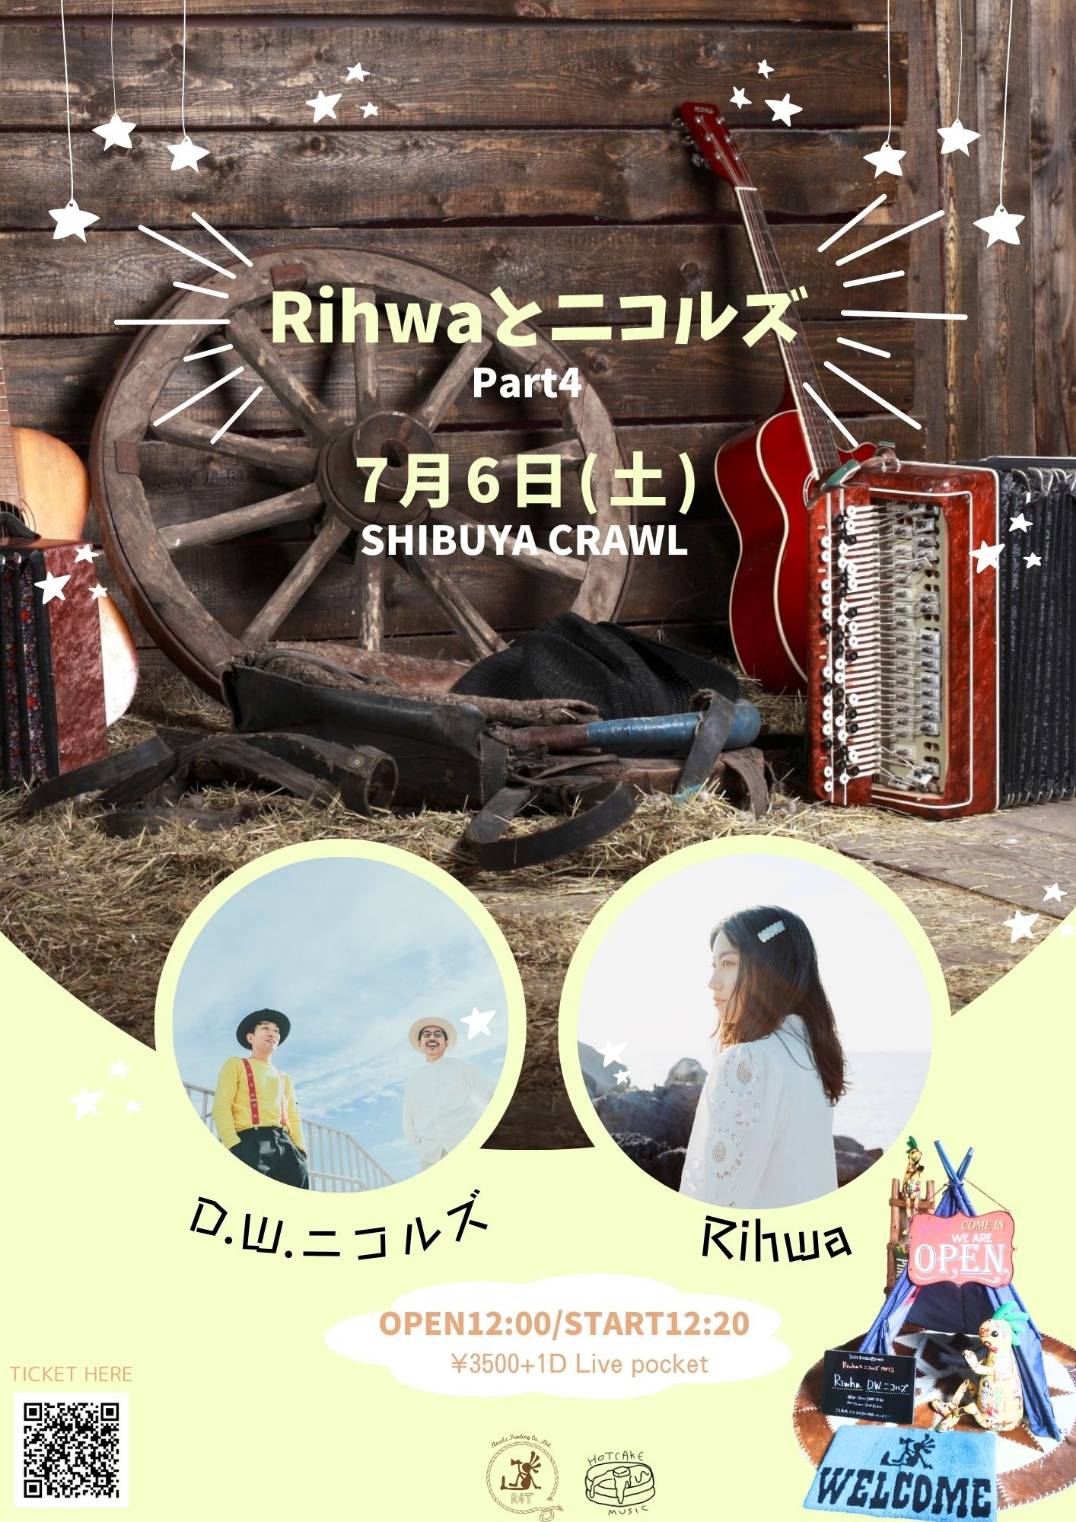 LIVE】7/6(土)「Rihwaとニコルズ」Part4 at渋谷CRAWL 決定!!!!! - D.W.ニコルズ オフィシャルサイト